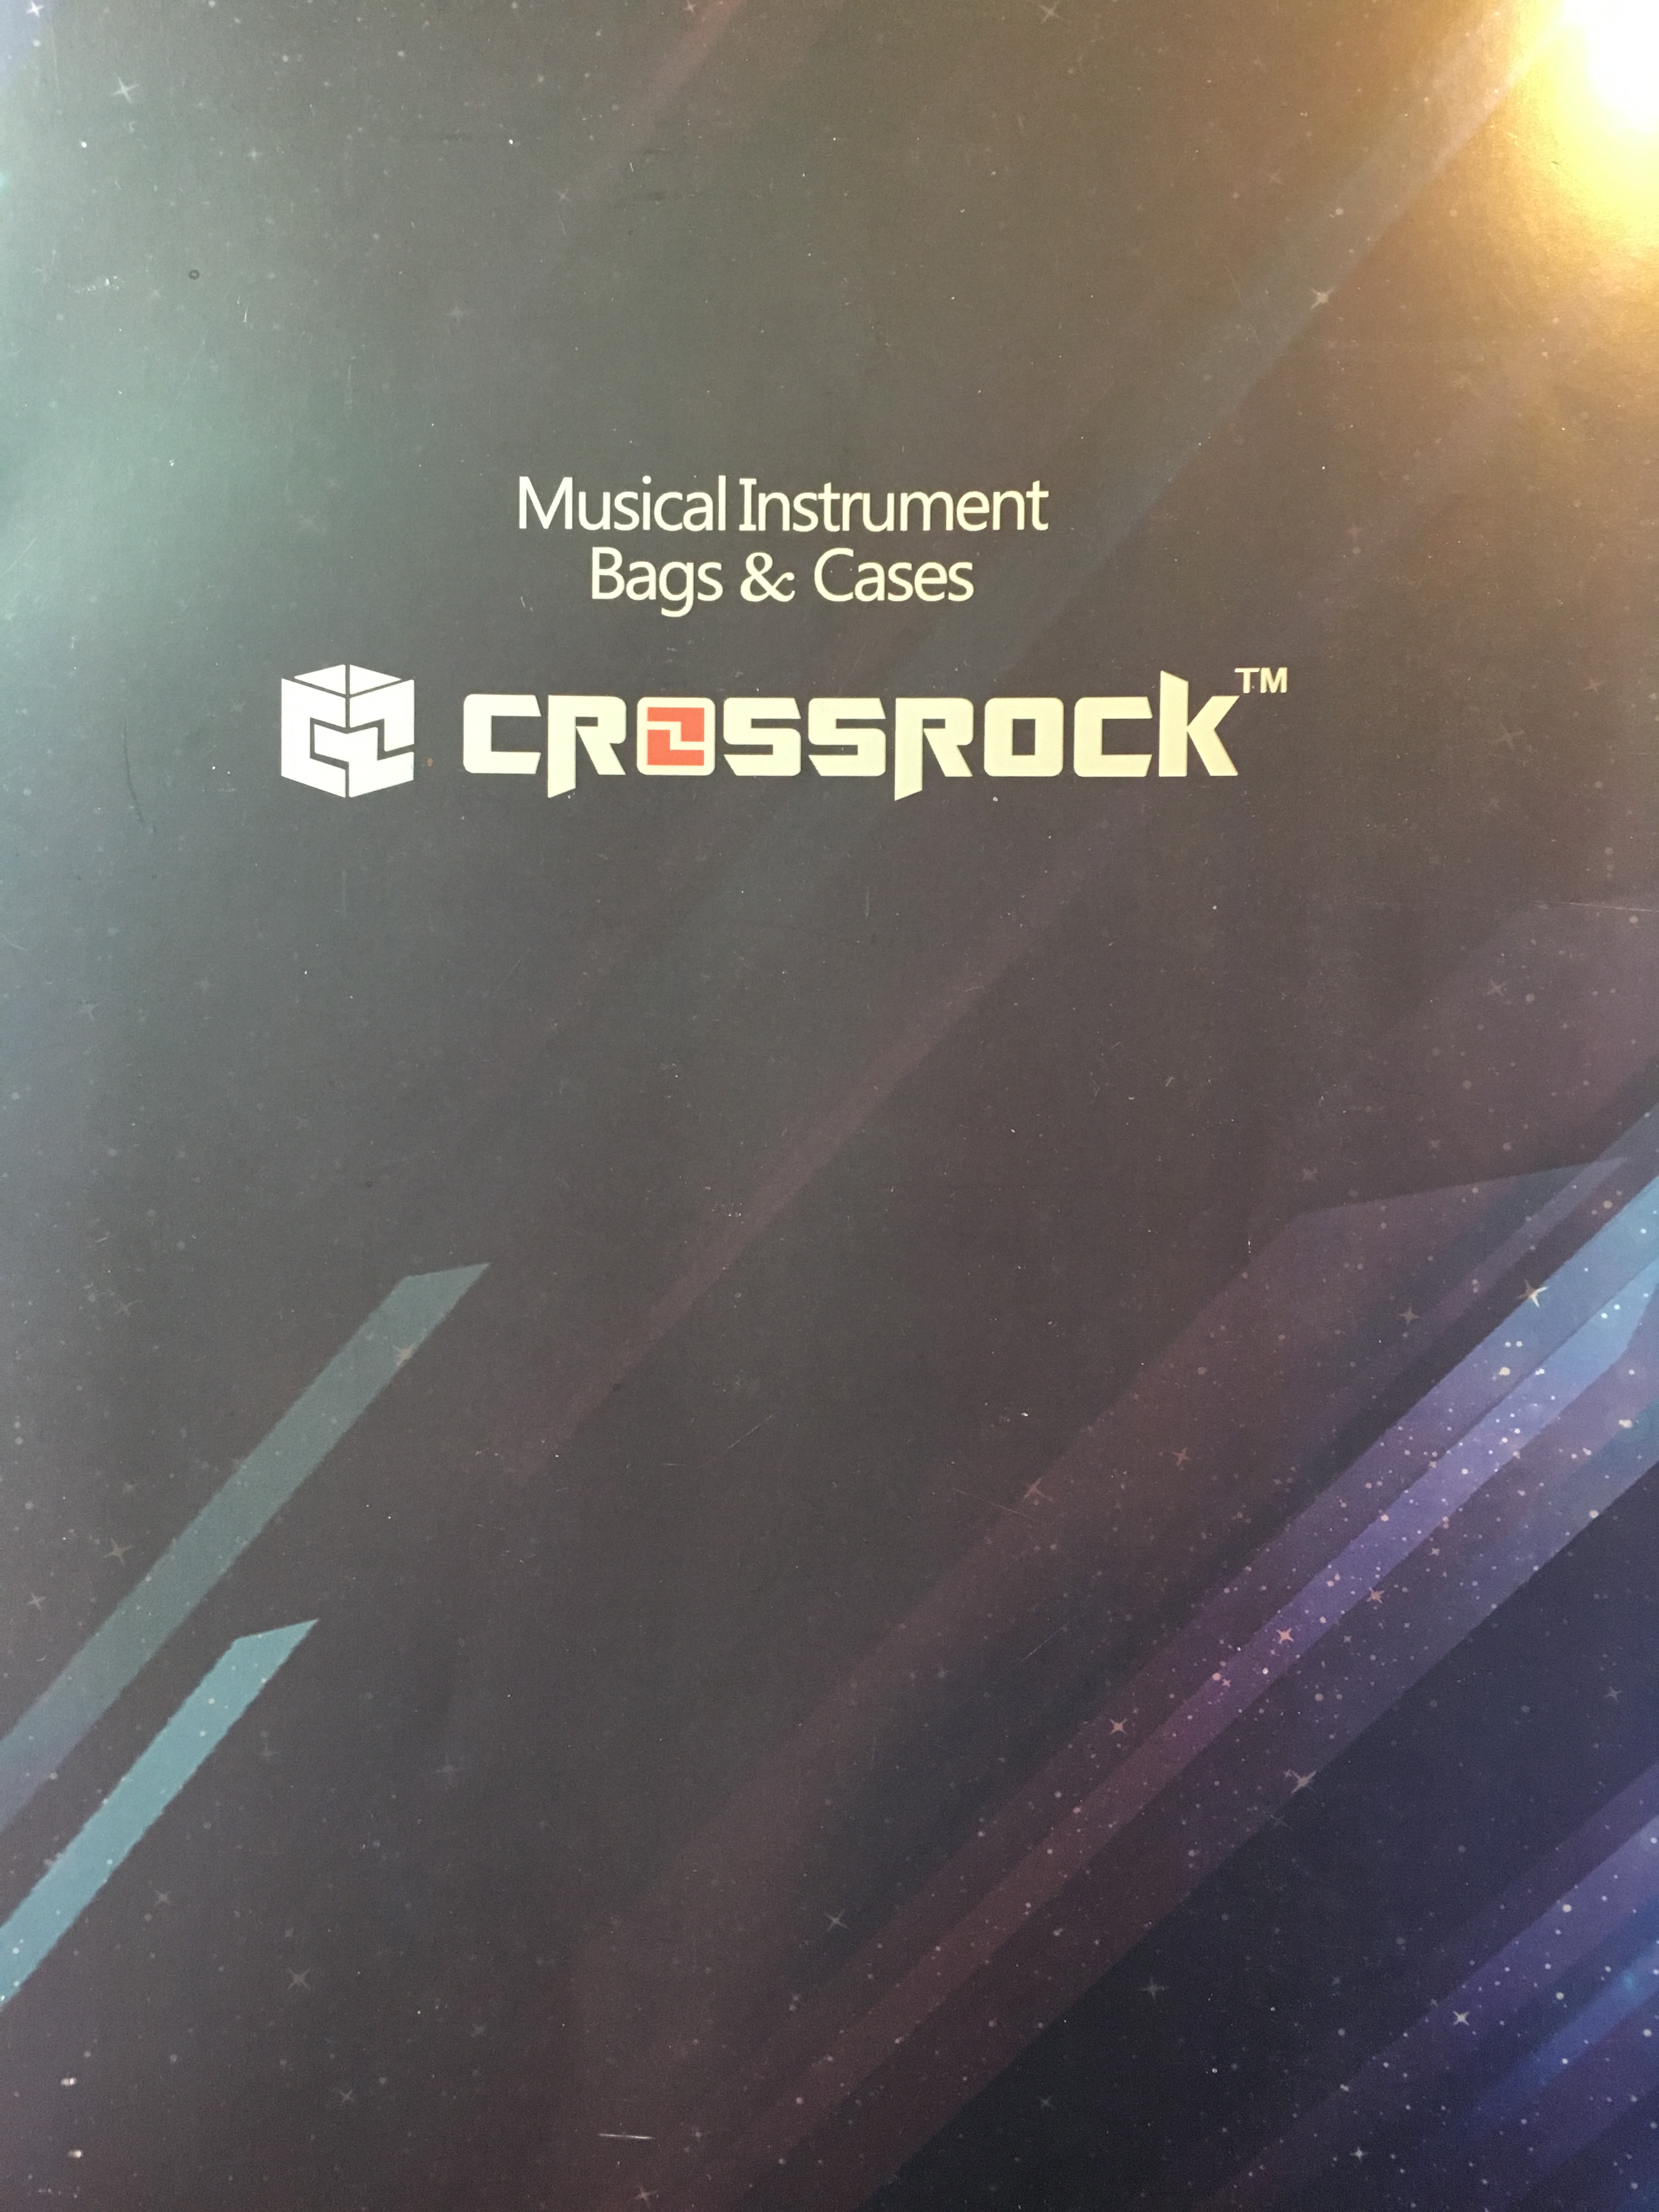 Crossrock full range catalogue